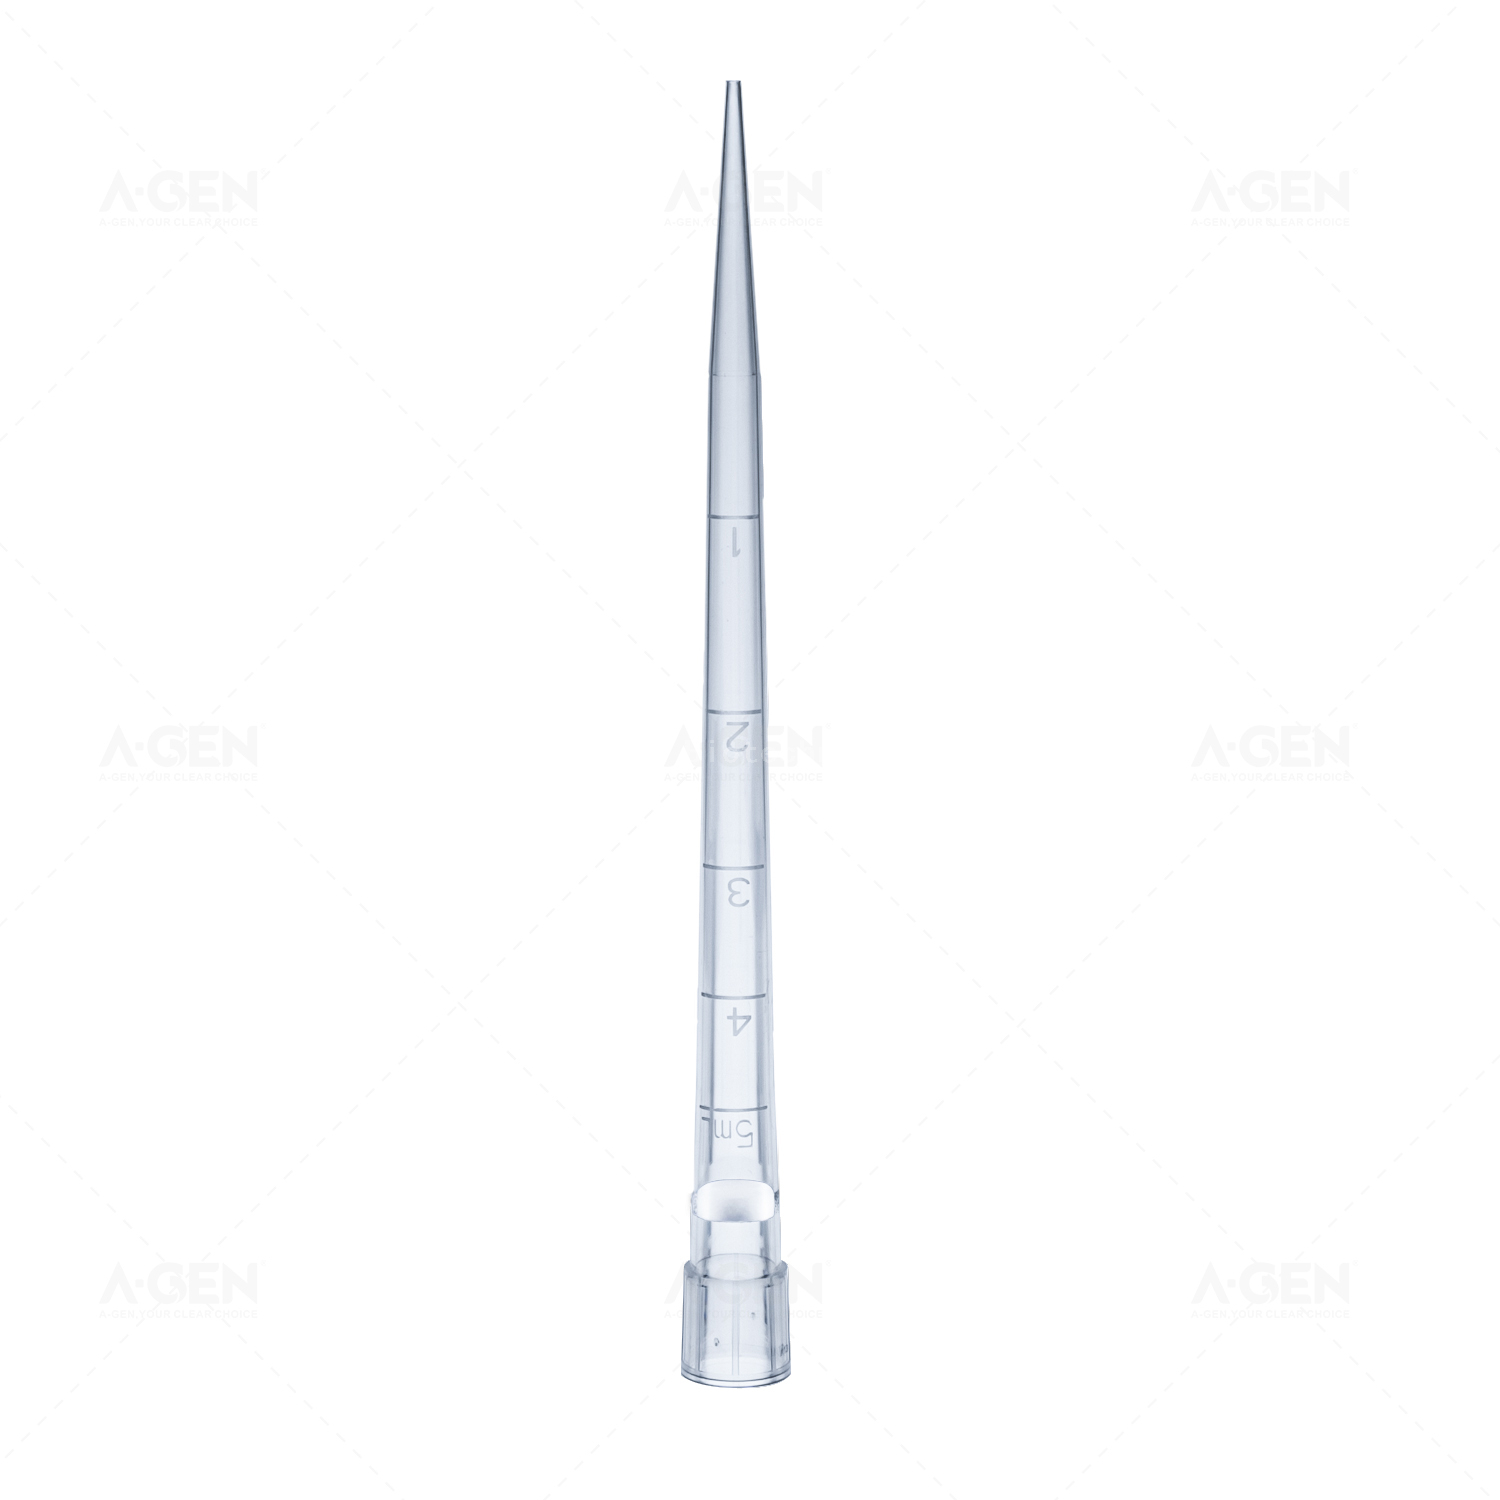 5mL 长过滤吸头，宽口，适用于 Satorius Dragon 移液器袋或架包装